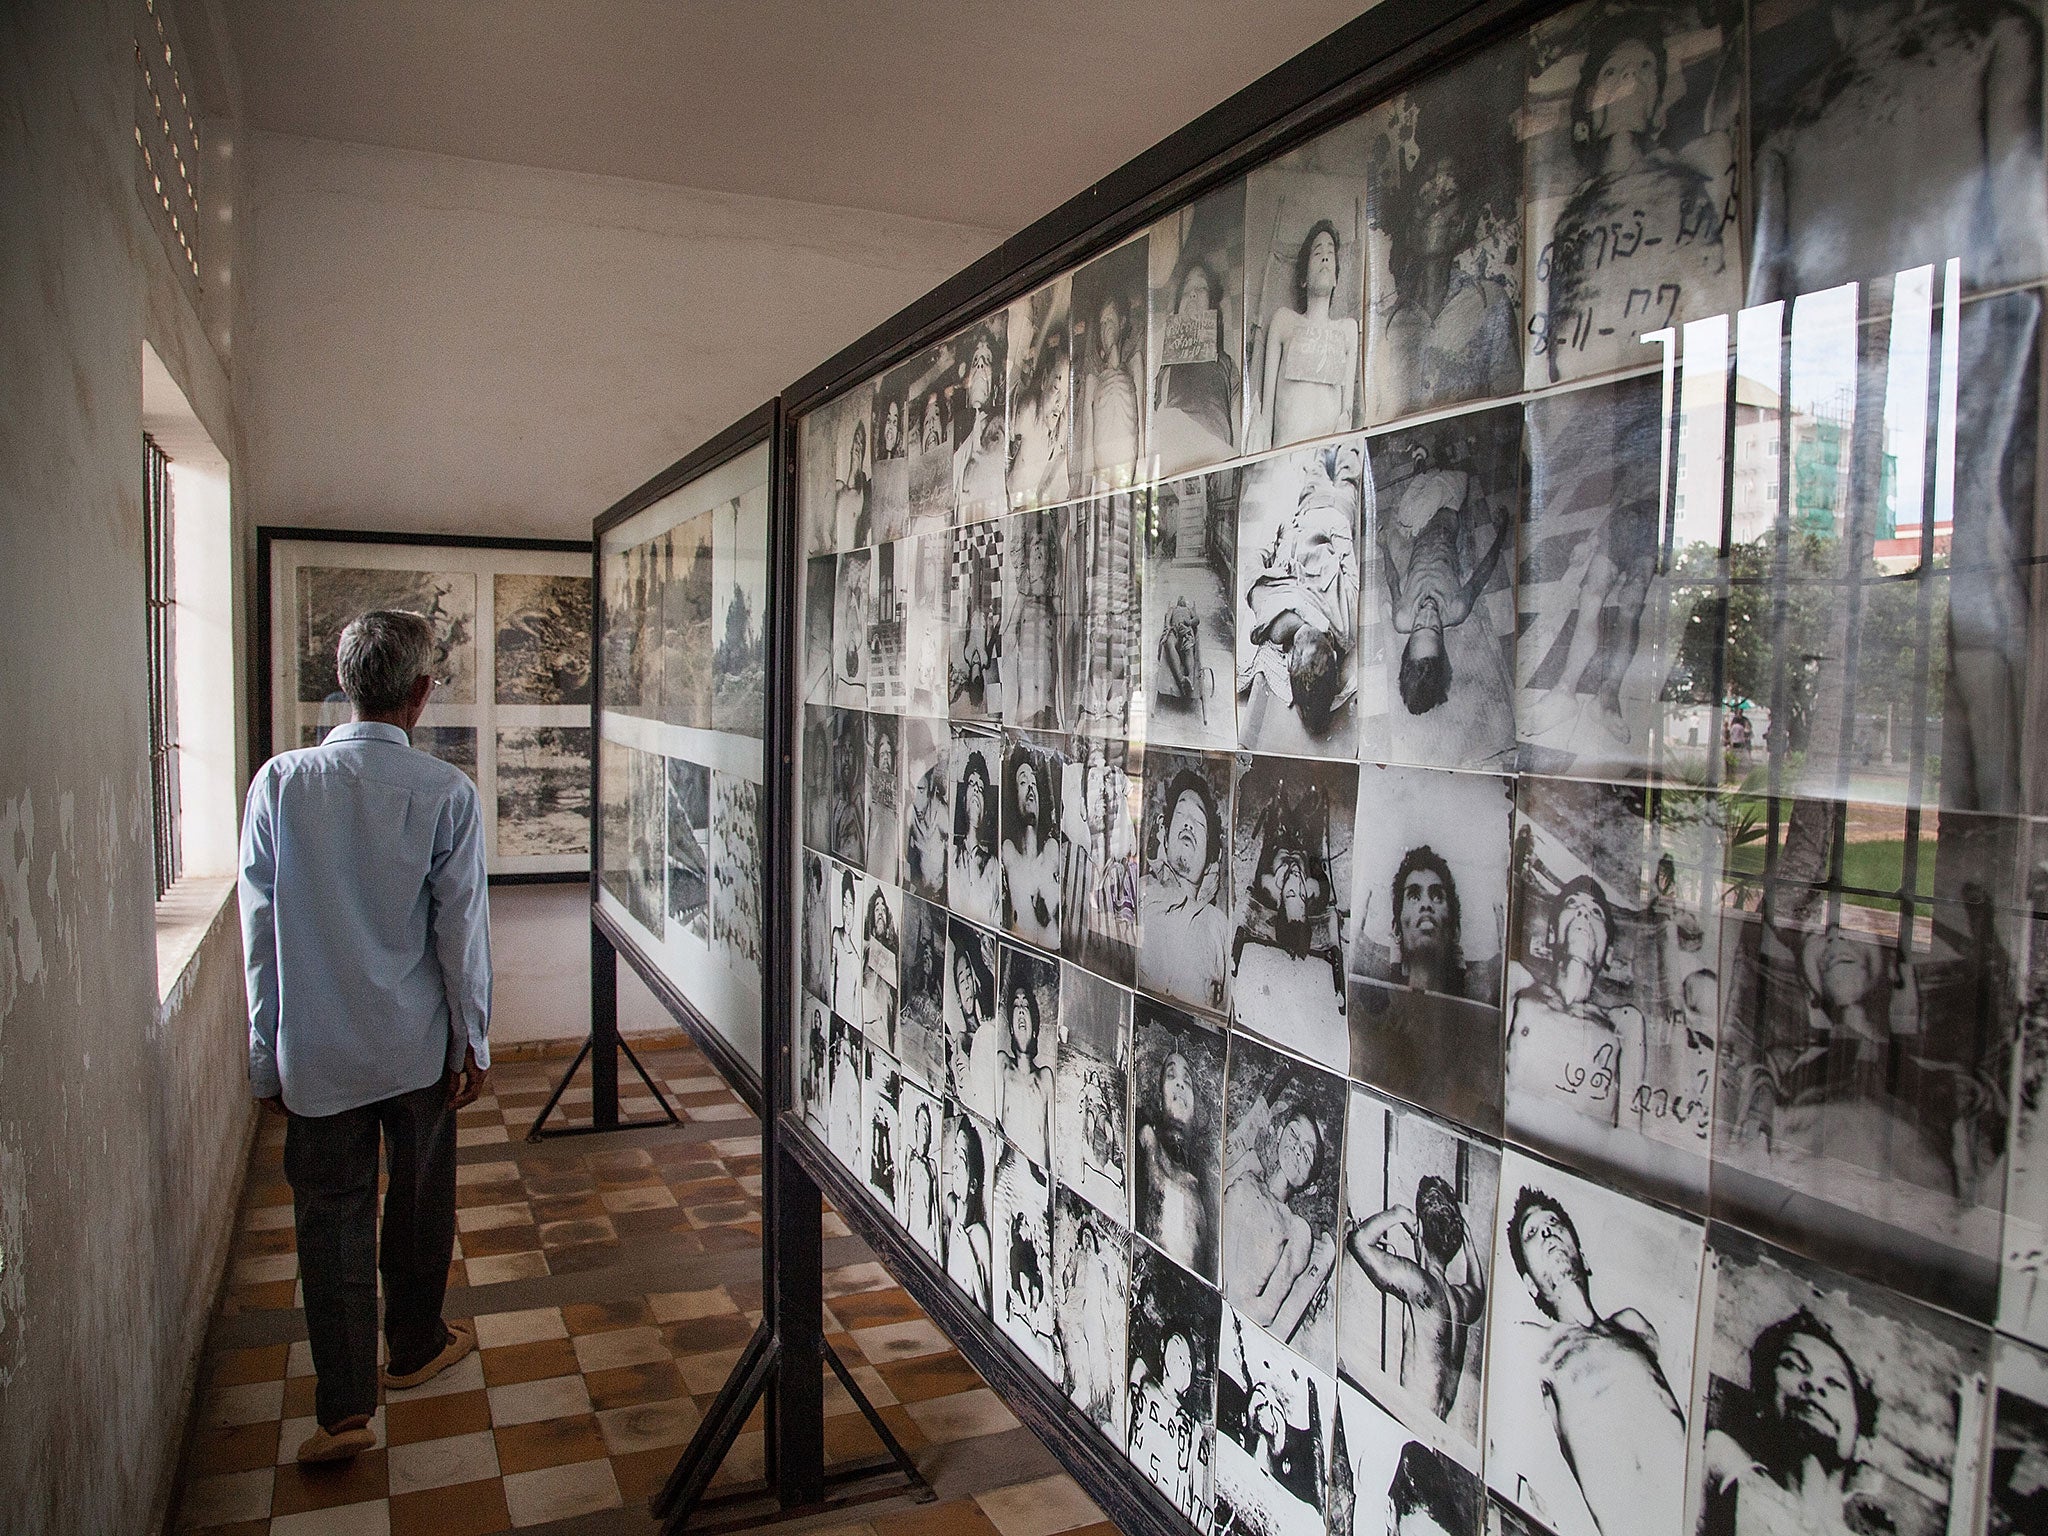 Photographs of dead prisoners in Tuol Sleng prison